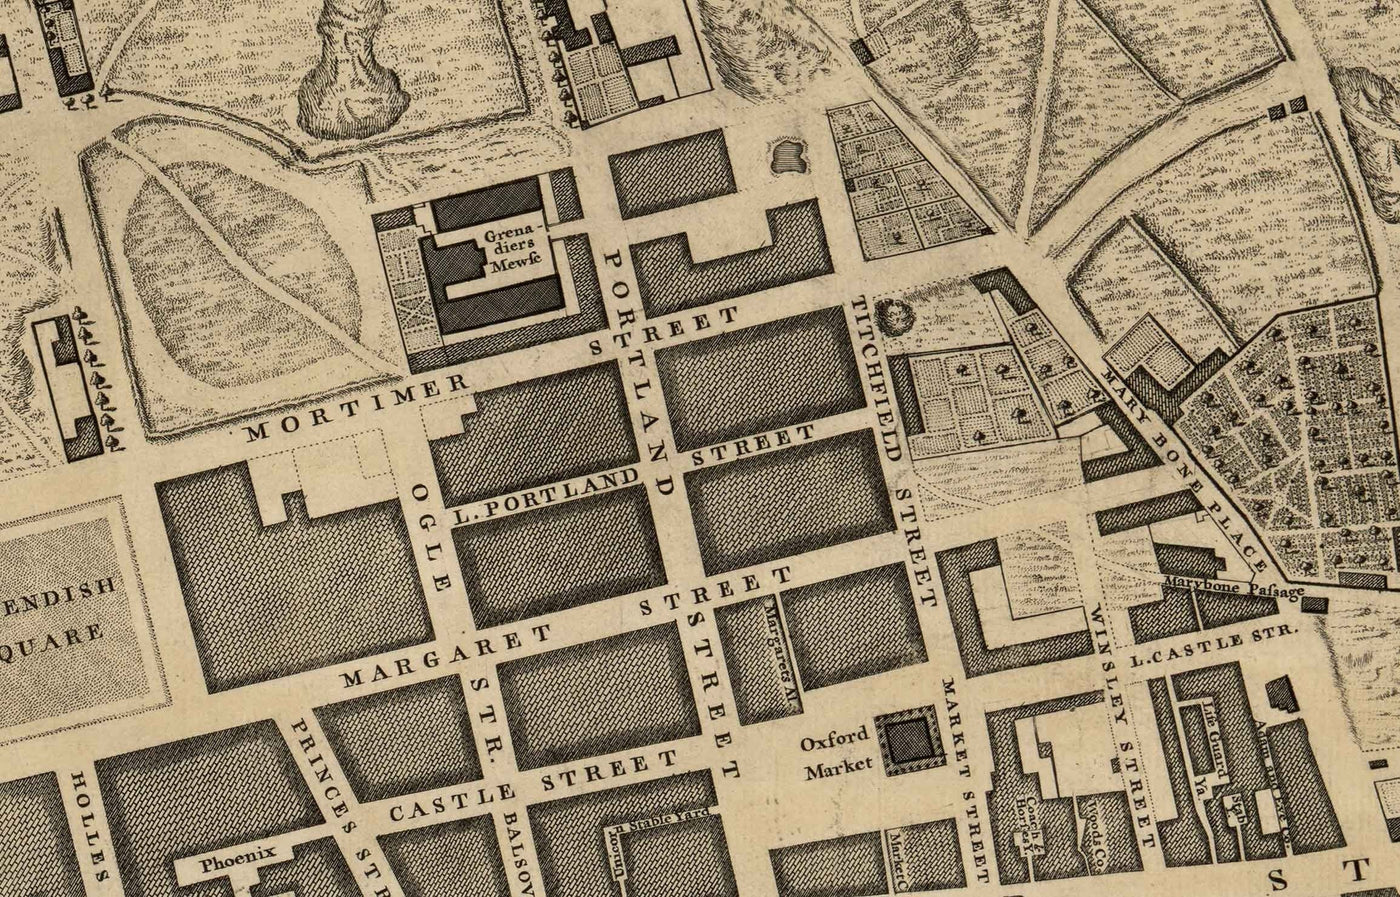 Alte Karte von London von John Rocque, 1746, B1 - Oxford Street, Tottenham Court Road, Fitzrovia, Soho & Cavendish Square